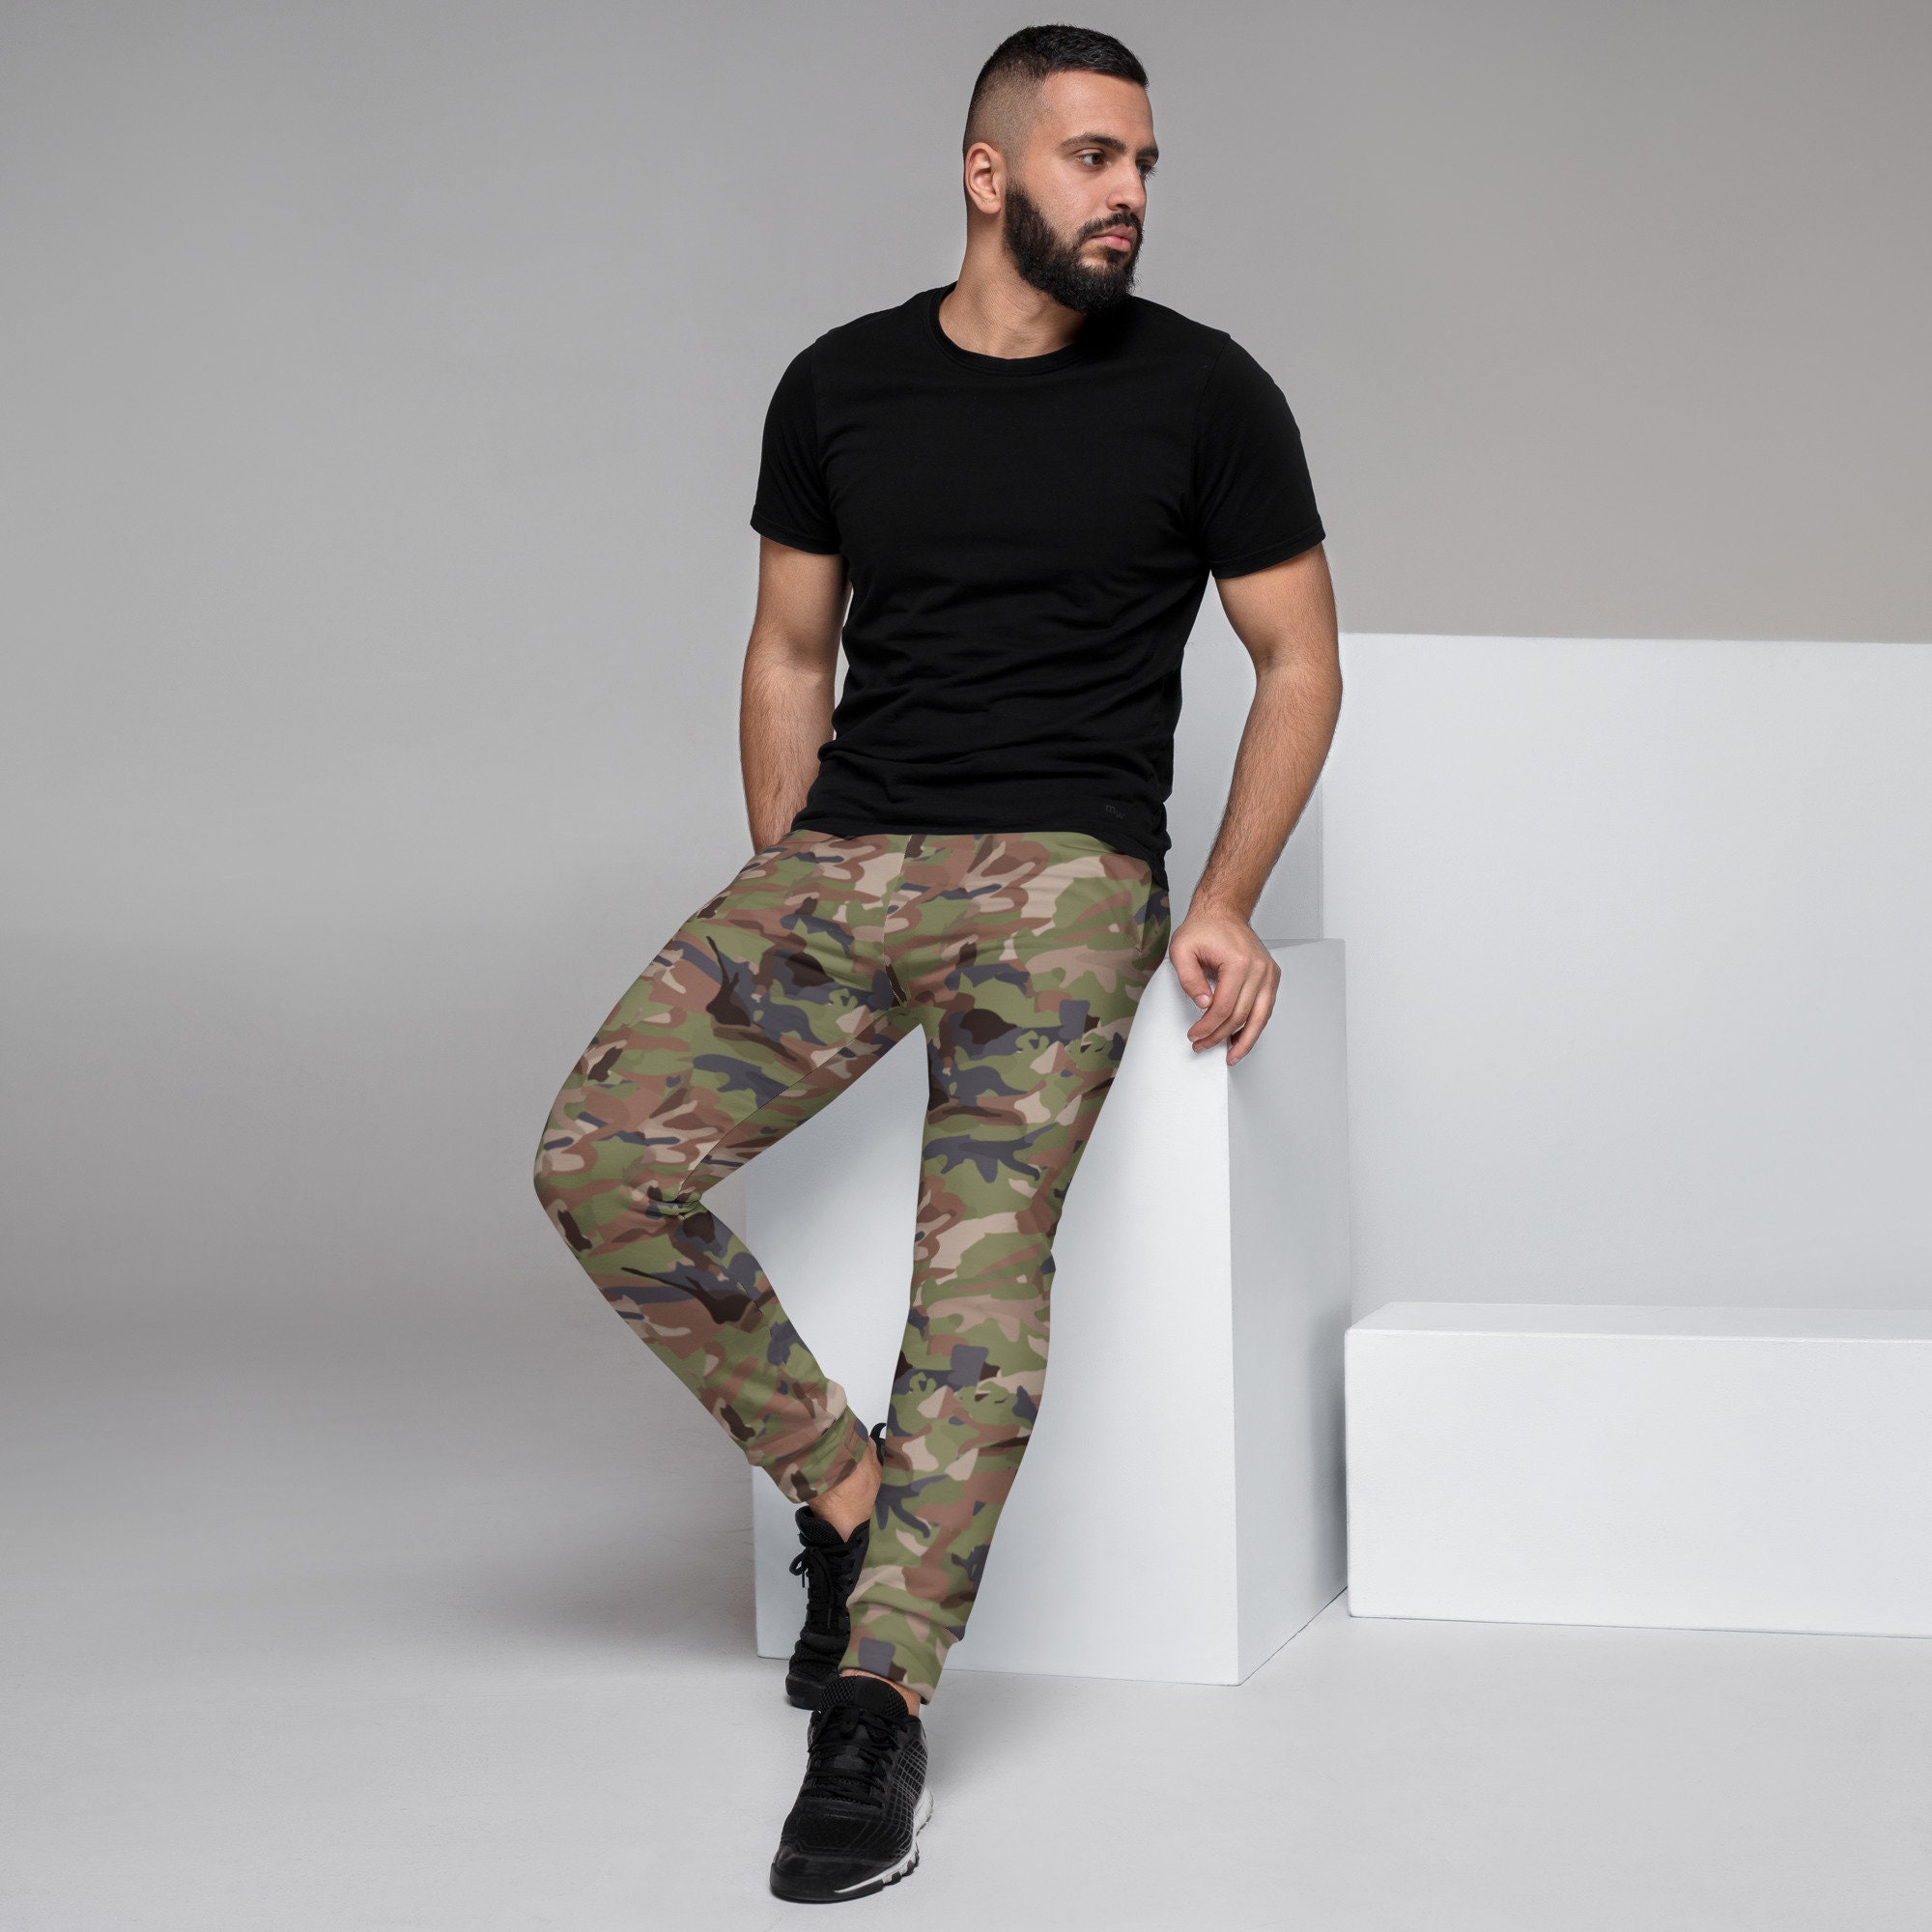 Jogger Pant Design For Girls Army Print Pants Design 2021 Joggers Design  Haul Top and Jogger 2021  YouTube